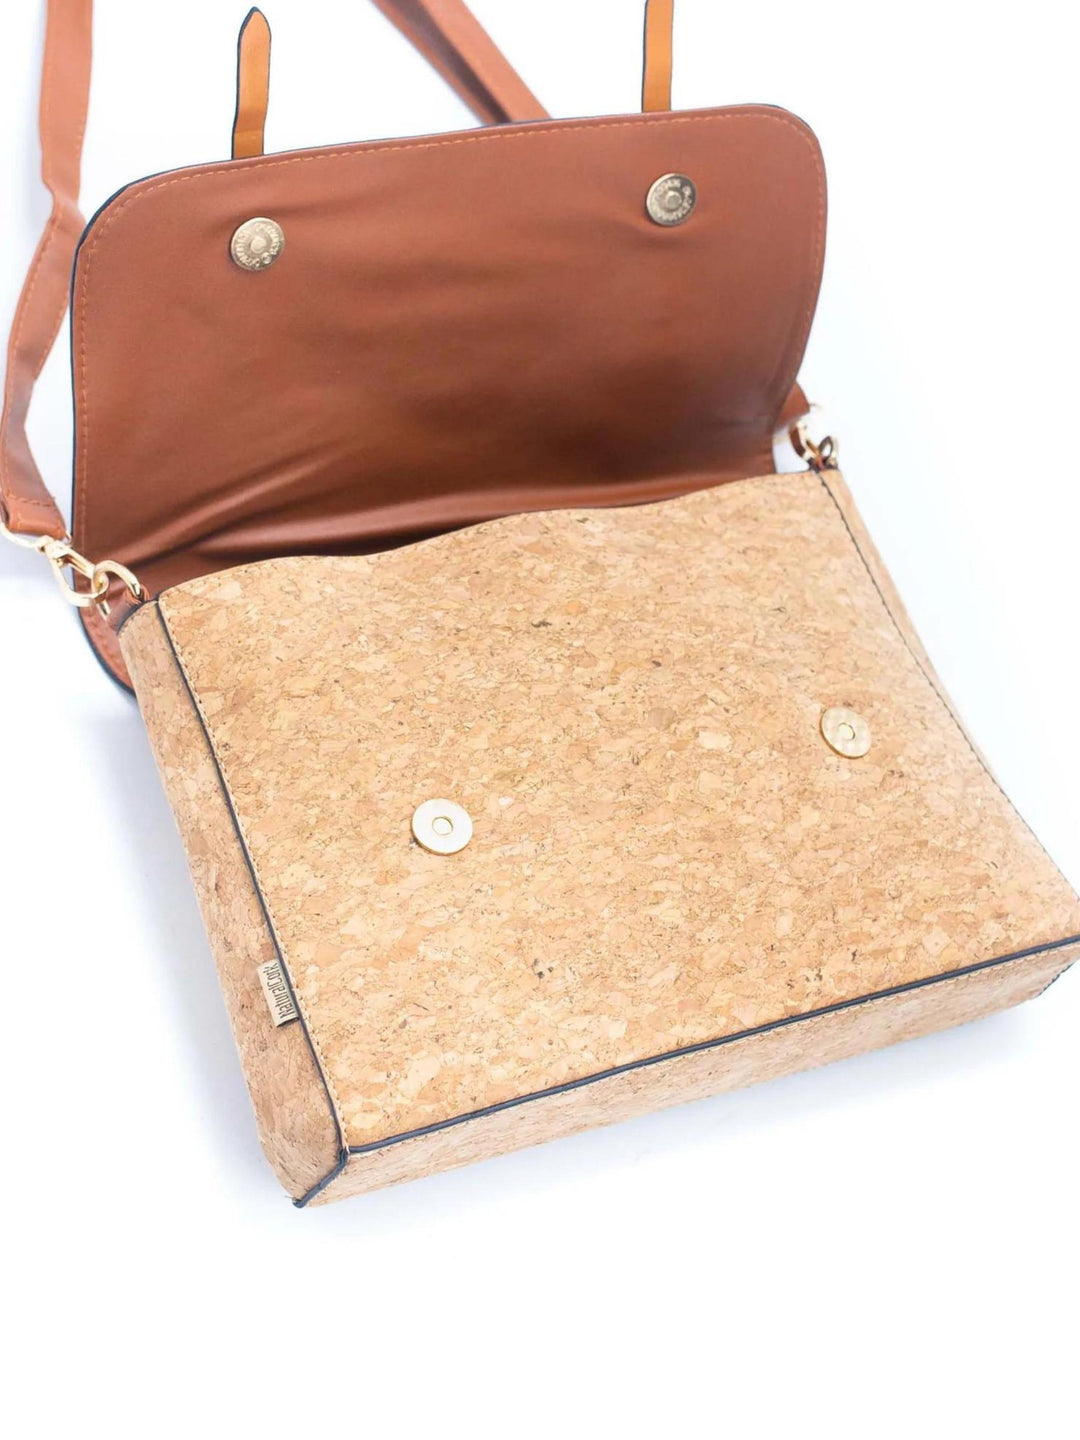 Handmade Women's Genuine Leather Handbags Designer Cross Shoulder Bag Sale for Women, Brown